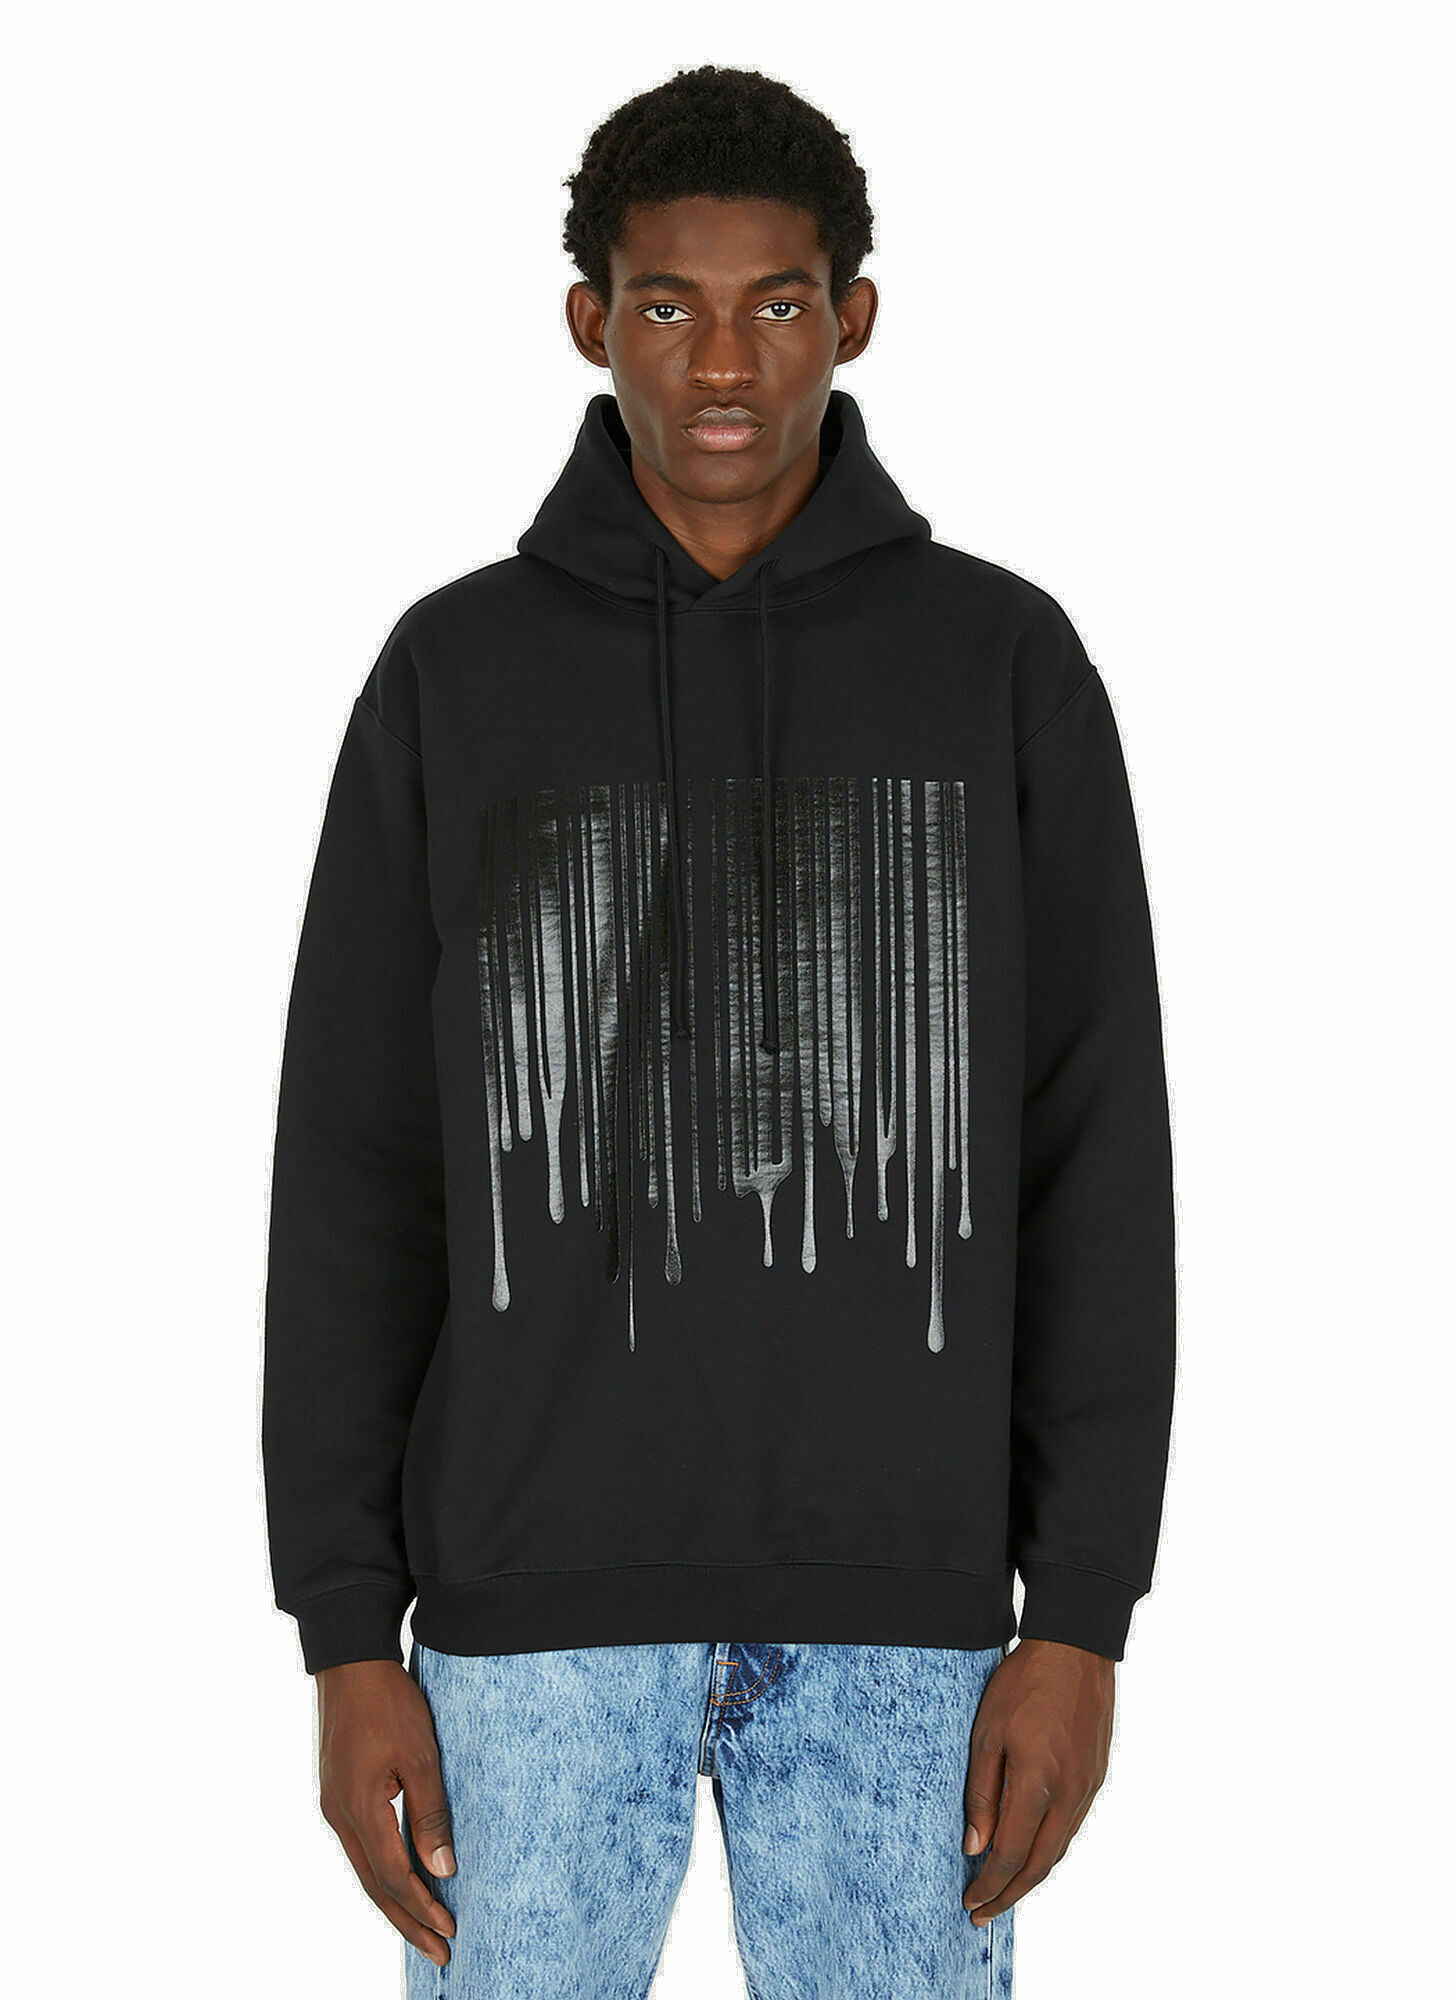 Dripping Barcode Hooded Sweatshirt in Black VTMNTS